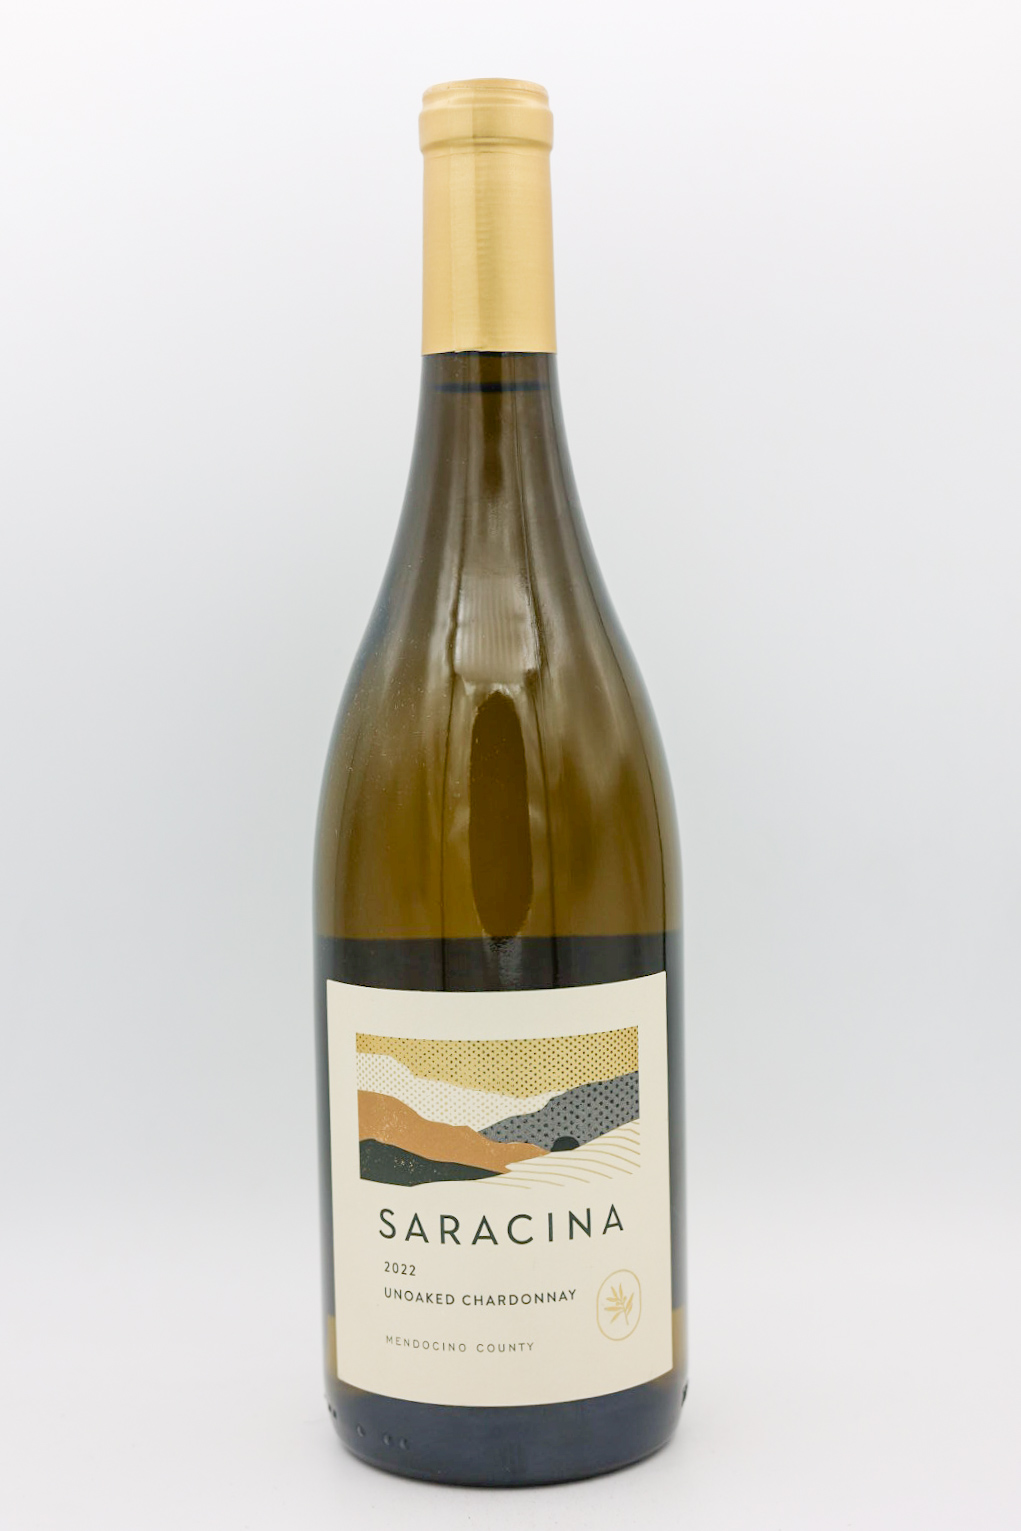 Saracina unoaked Chardonnay 2022